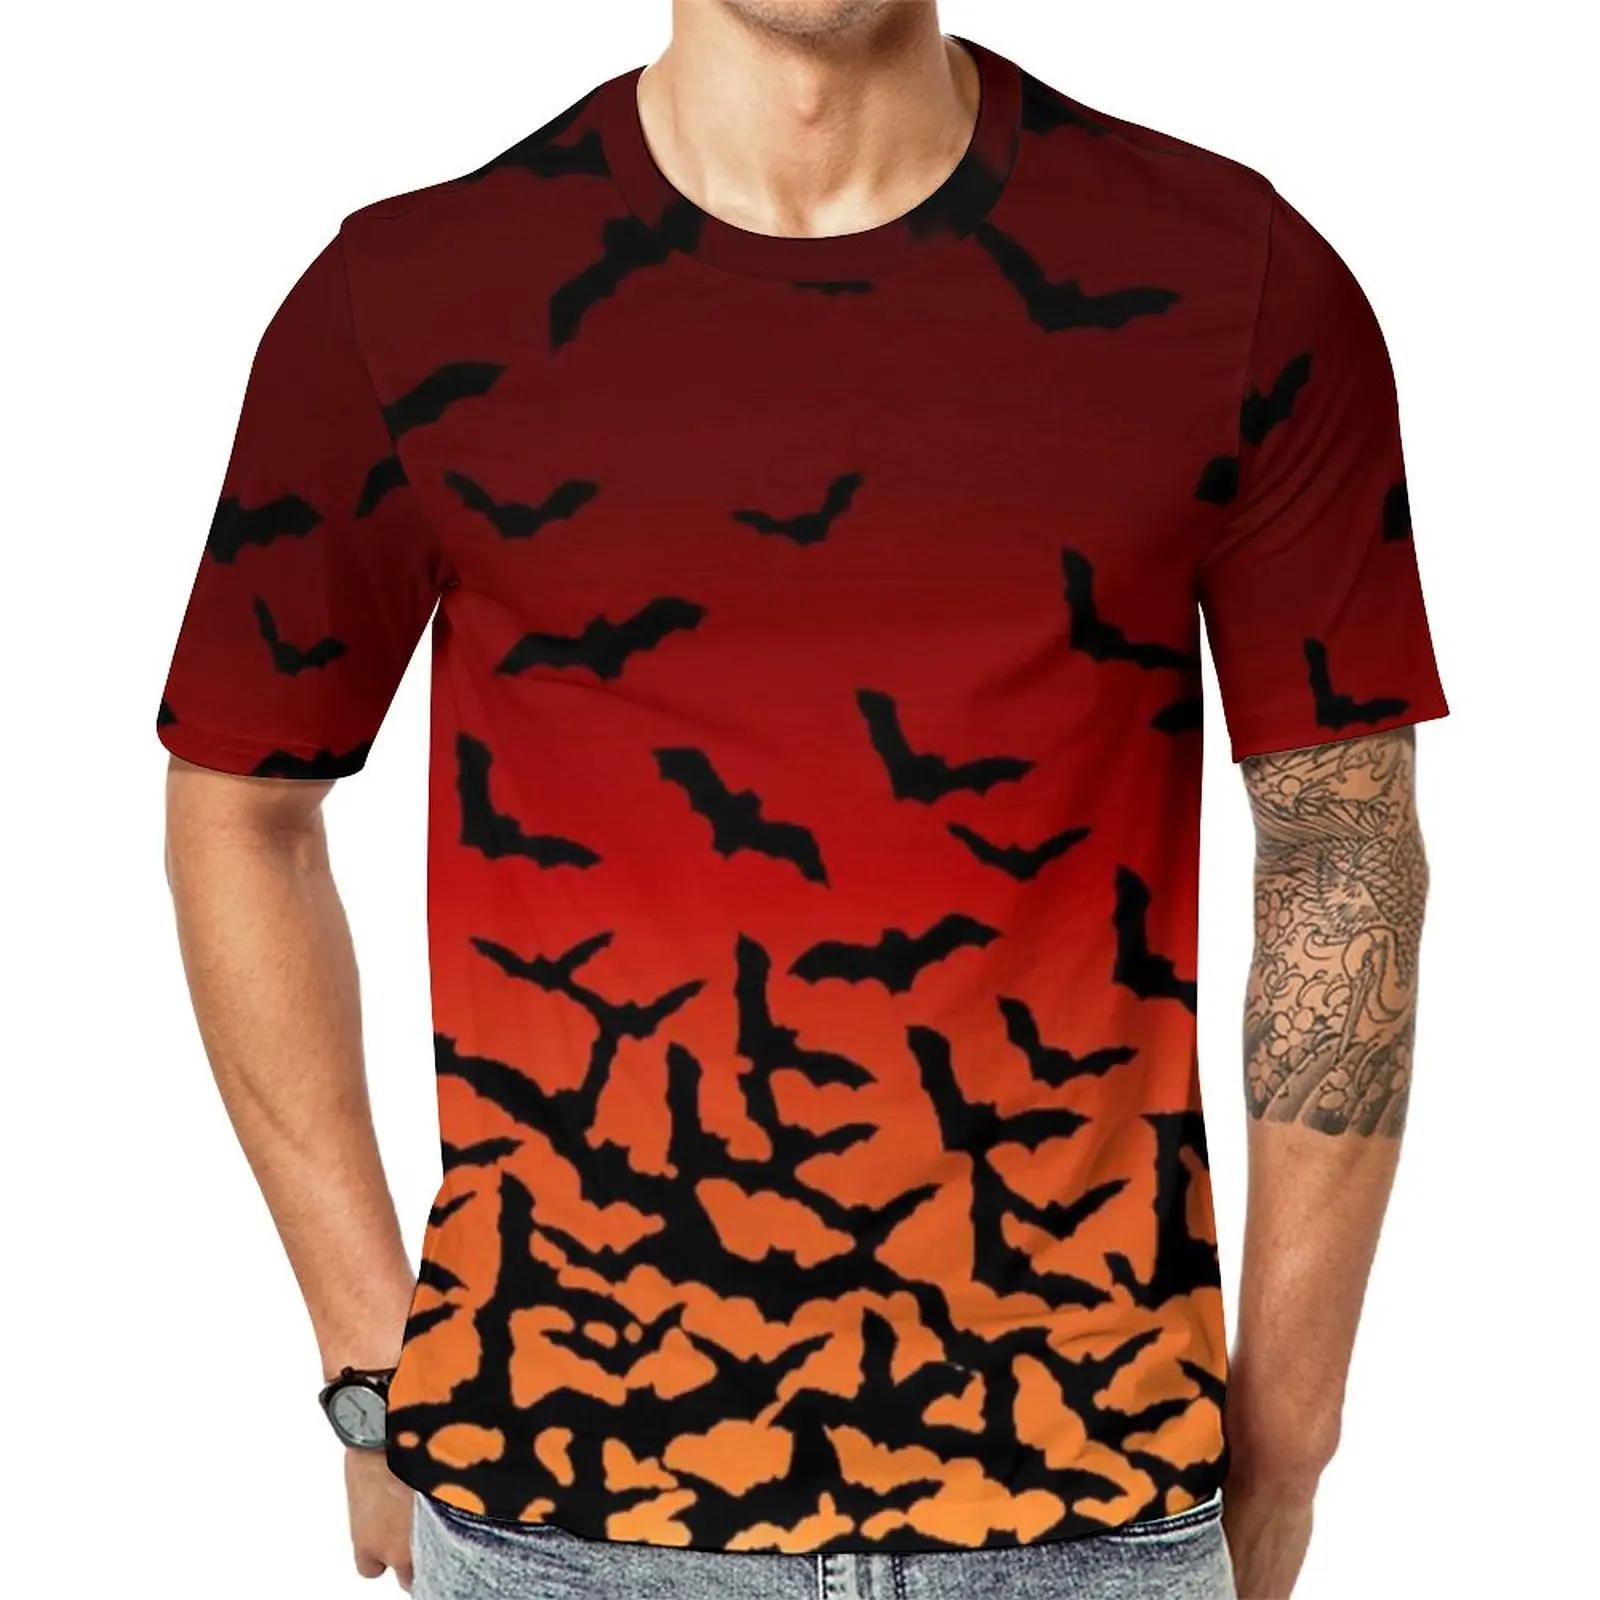 

Halloween T Shirt Man Bat Sunset Creatures Of The Night Fun T-Shirts Summer Vintage Tee Shirt Short Sleeve Big Size Clothing